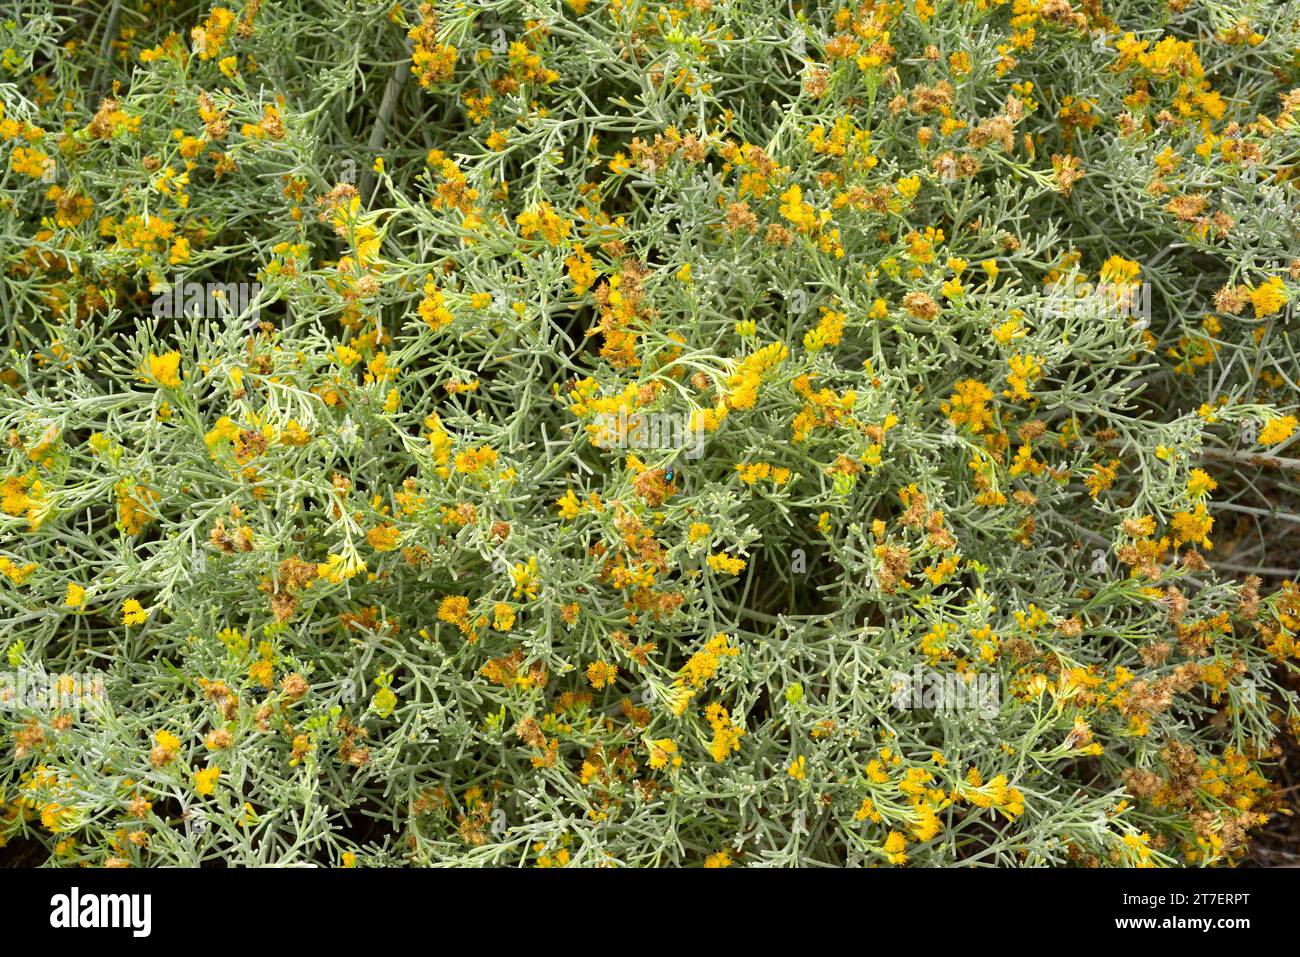 Salado blanco or dama (Schizogyne sericea) is a shrub endemic to Macaronesia (Canary Islands and Savage Islands). This photo was taken in La Palma, Ca Stock Photo